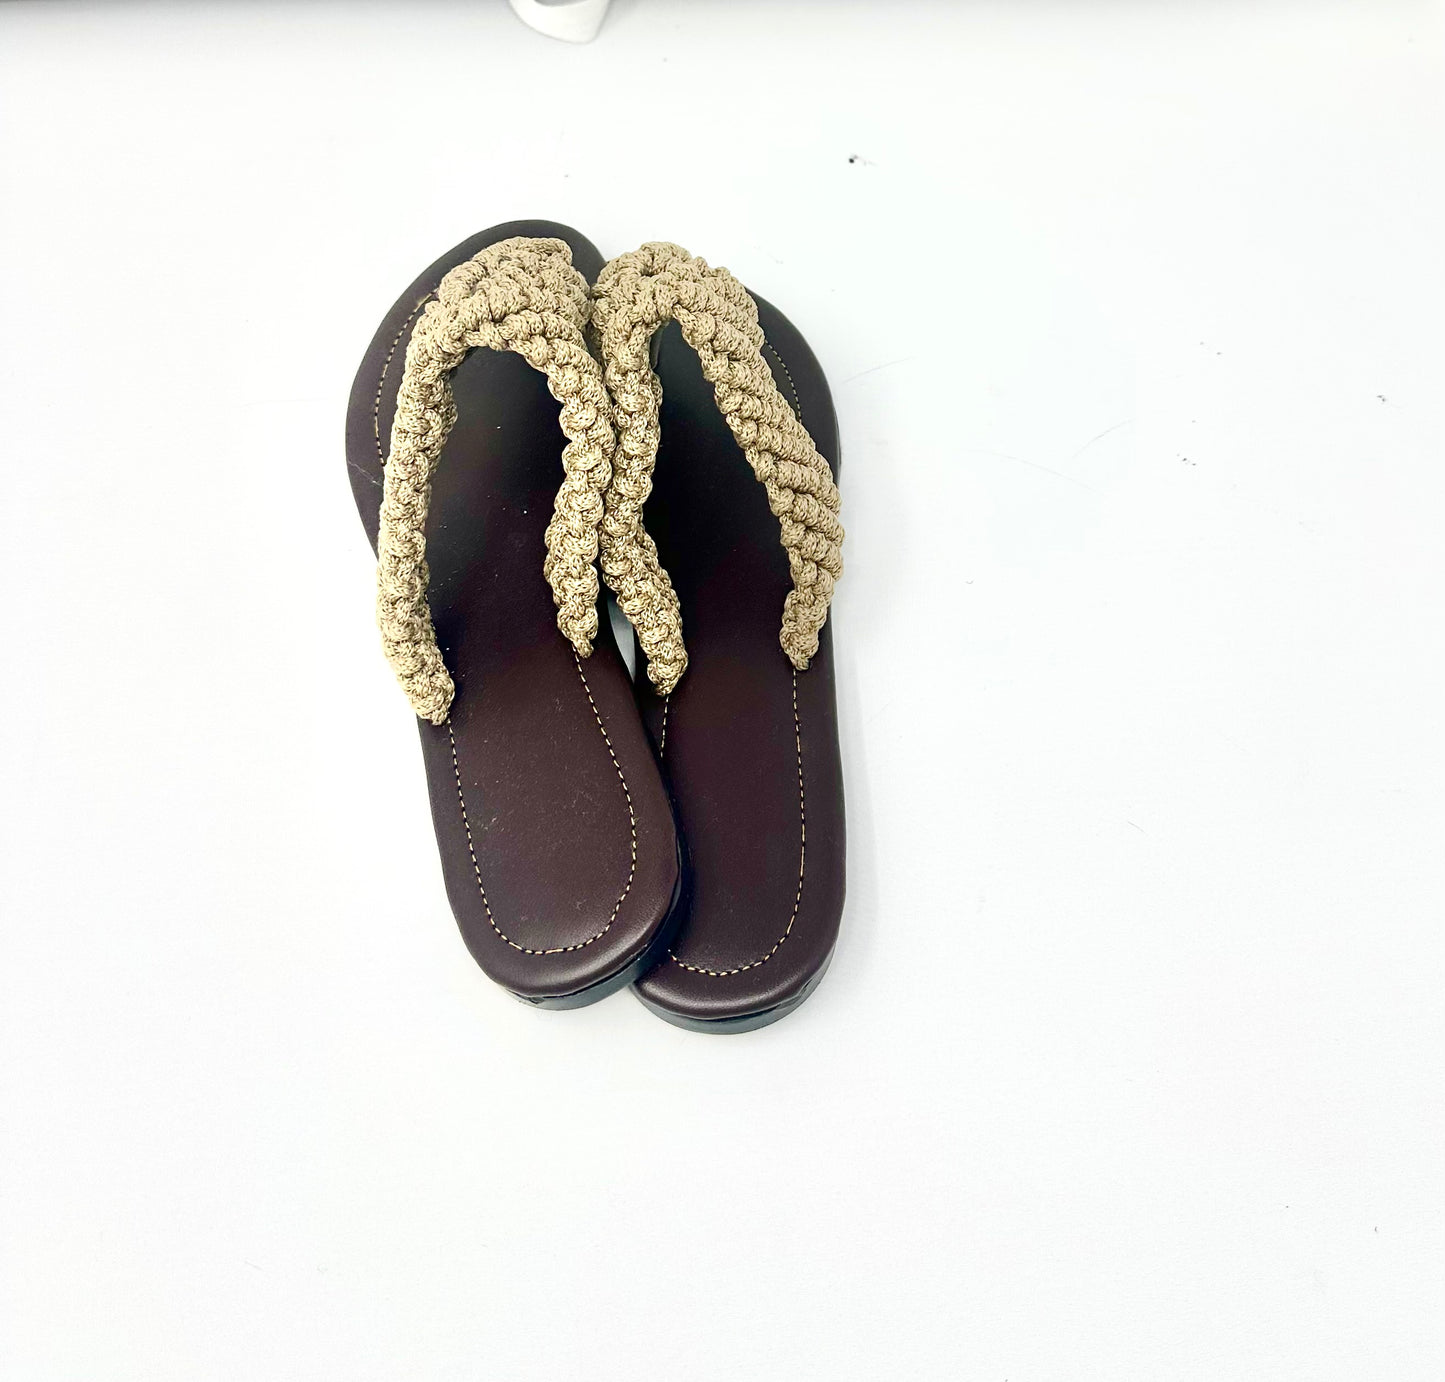 Macrame Sandals